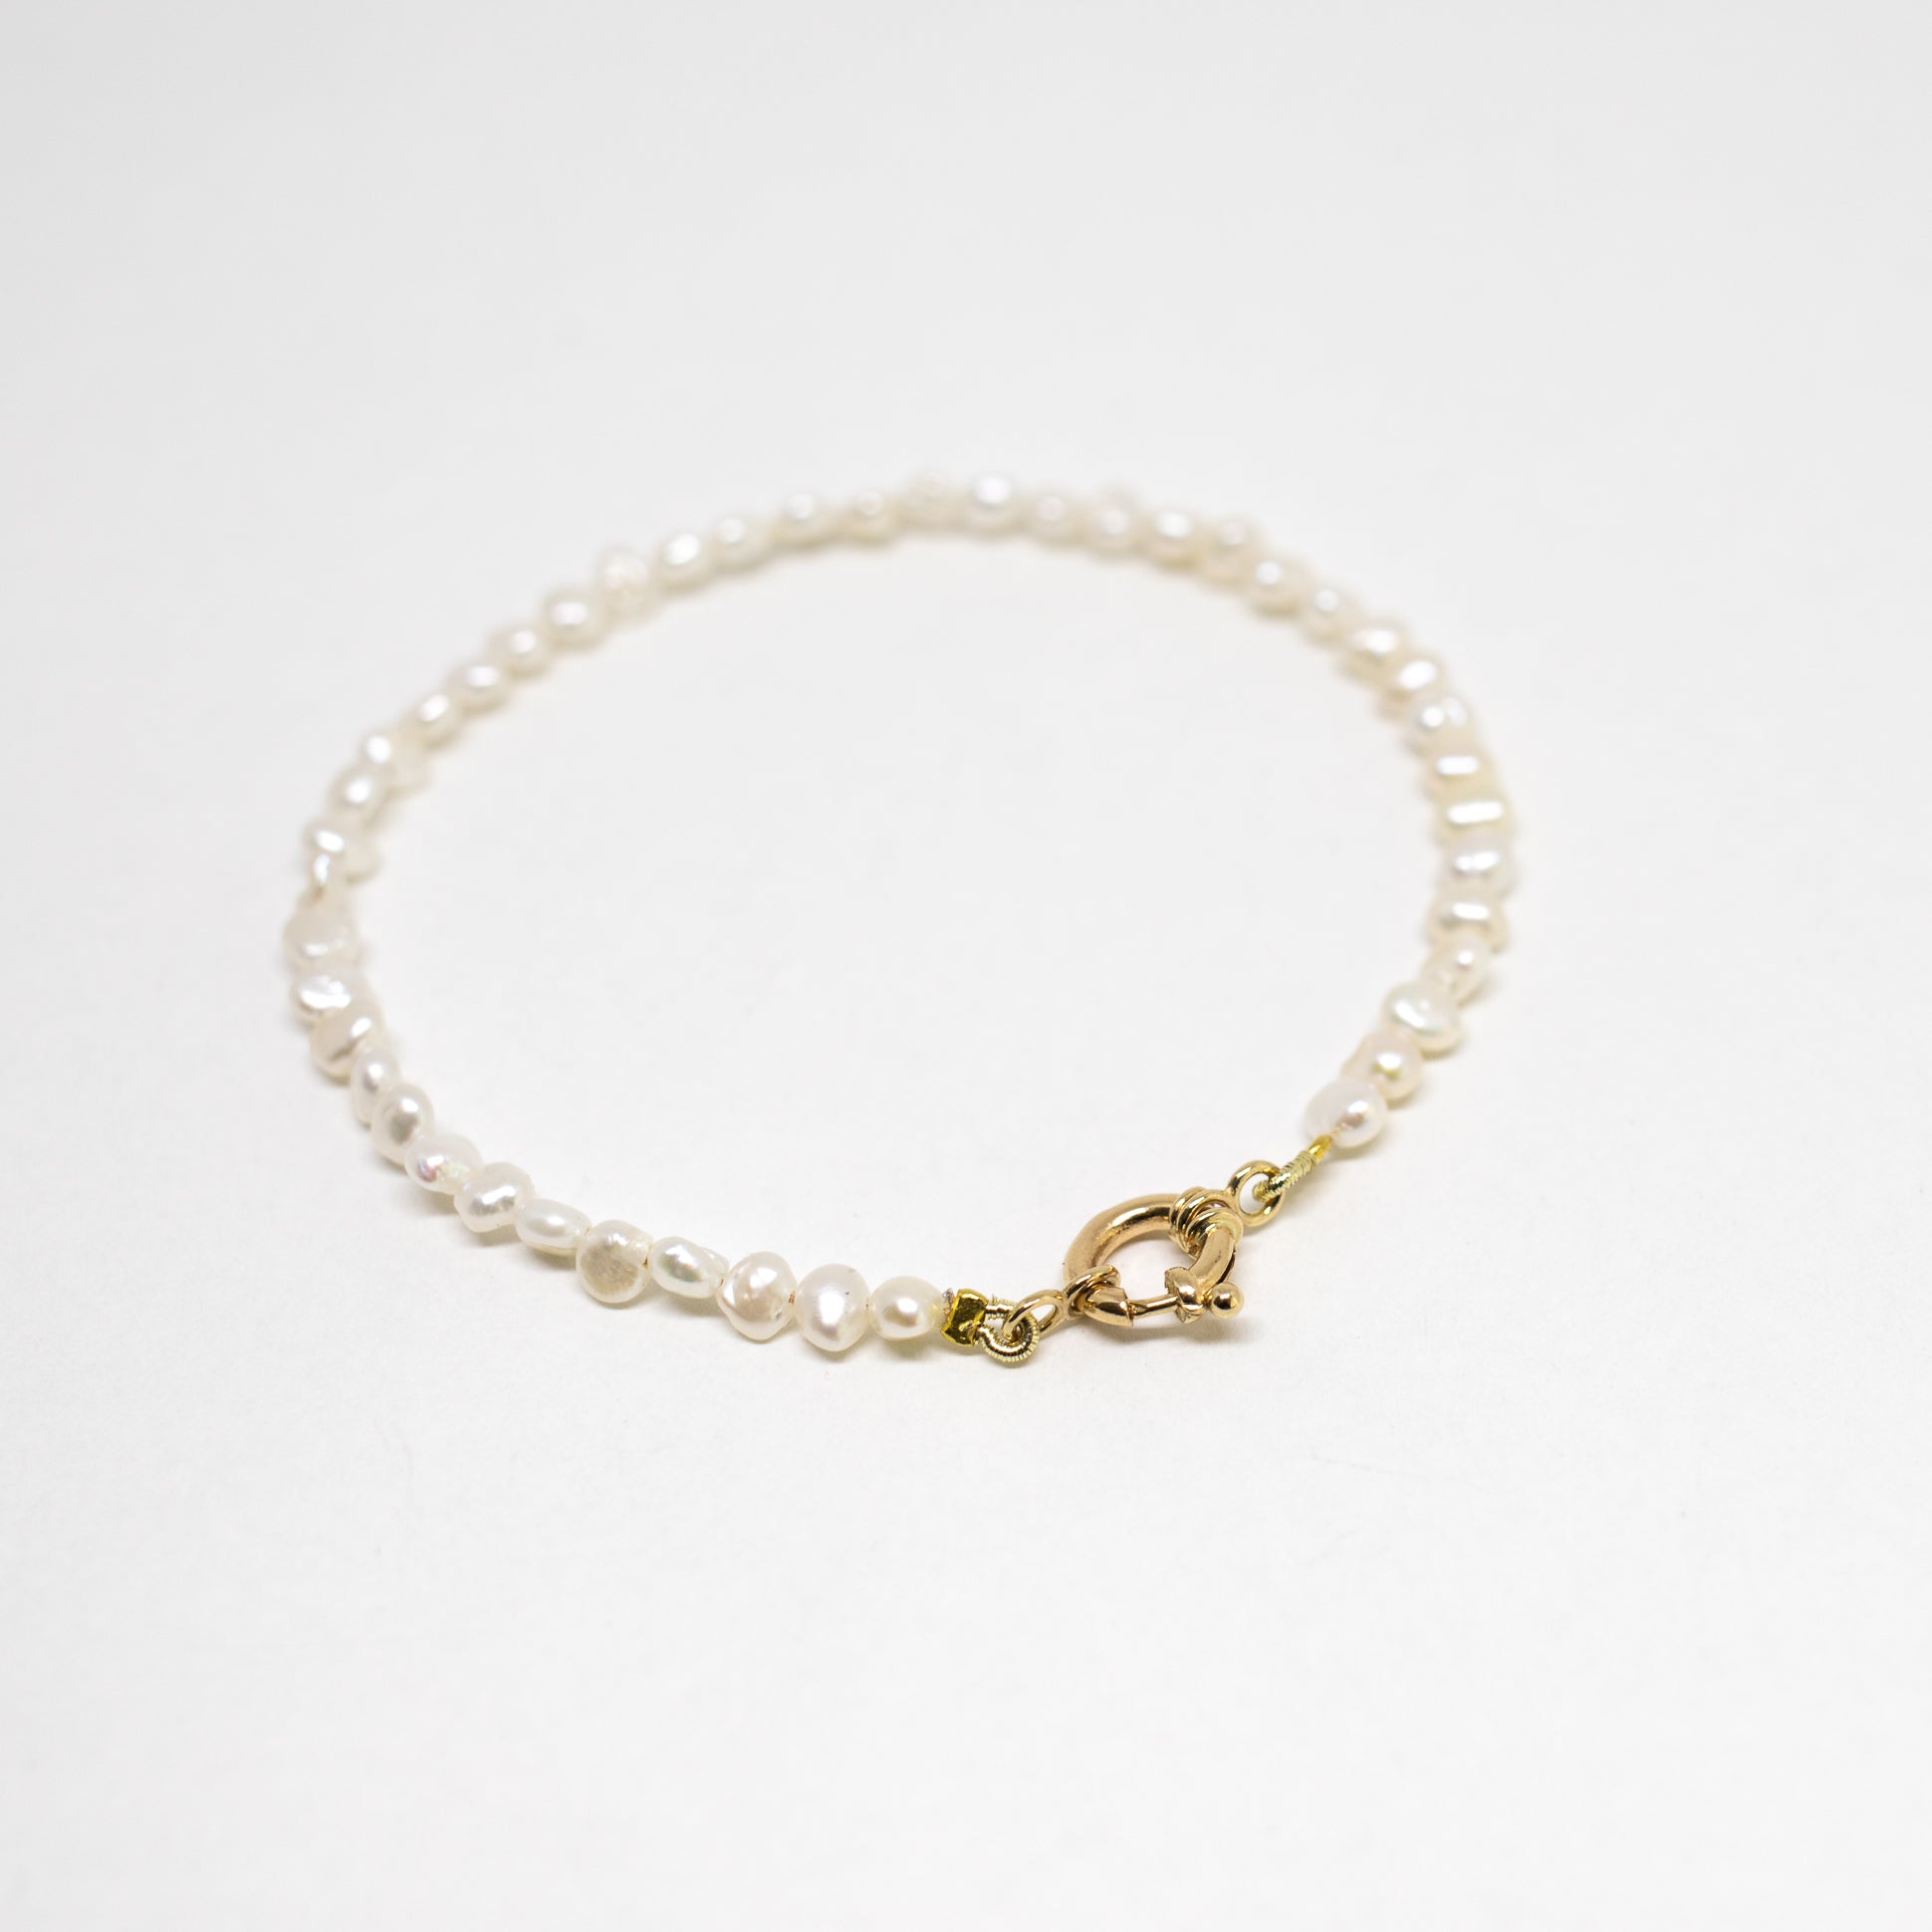 Baby pearl bracelet